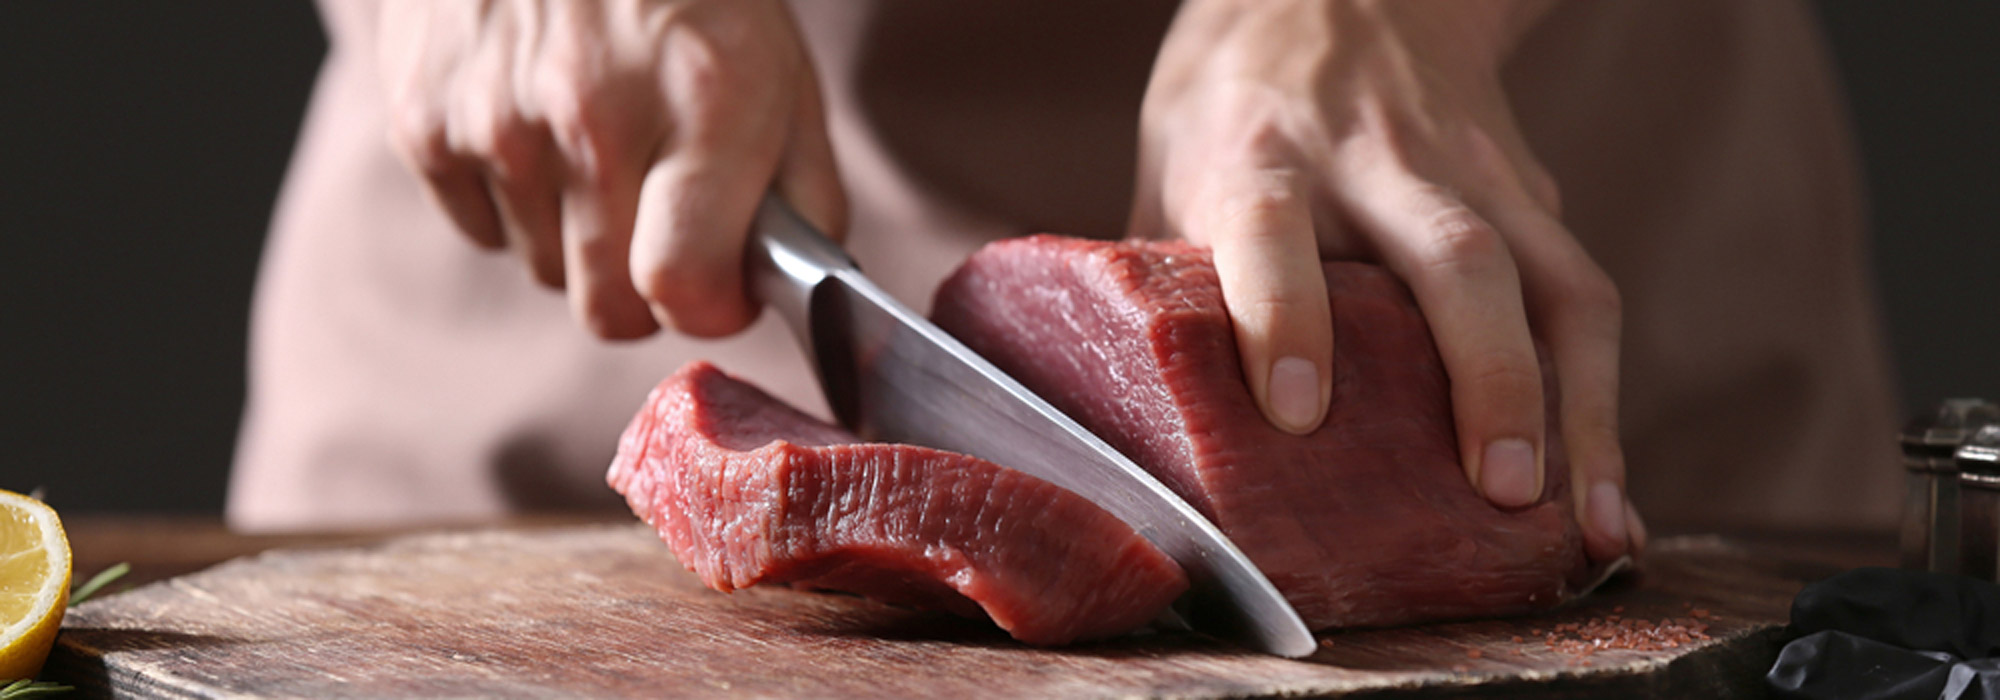 Cutting Raw Meat